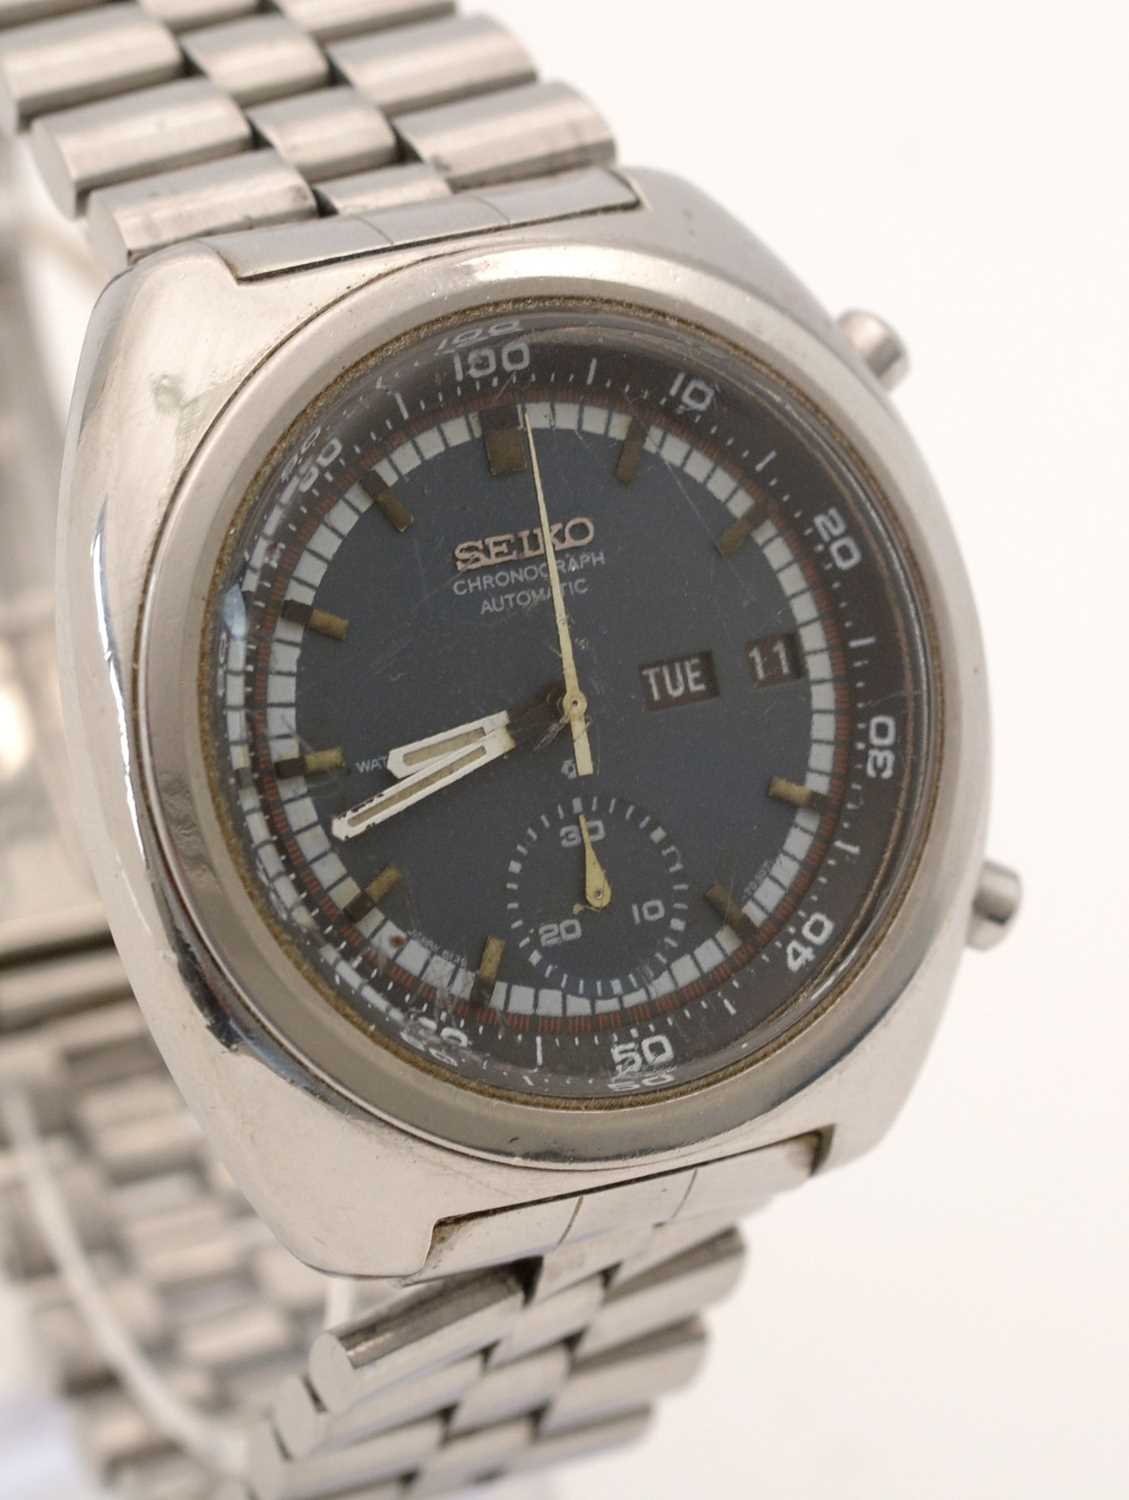 Seiko chronograph wristwatch. - Image 2 of 4